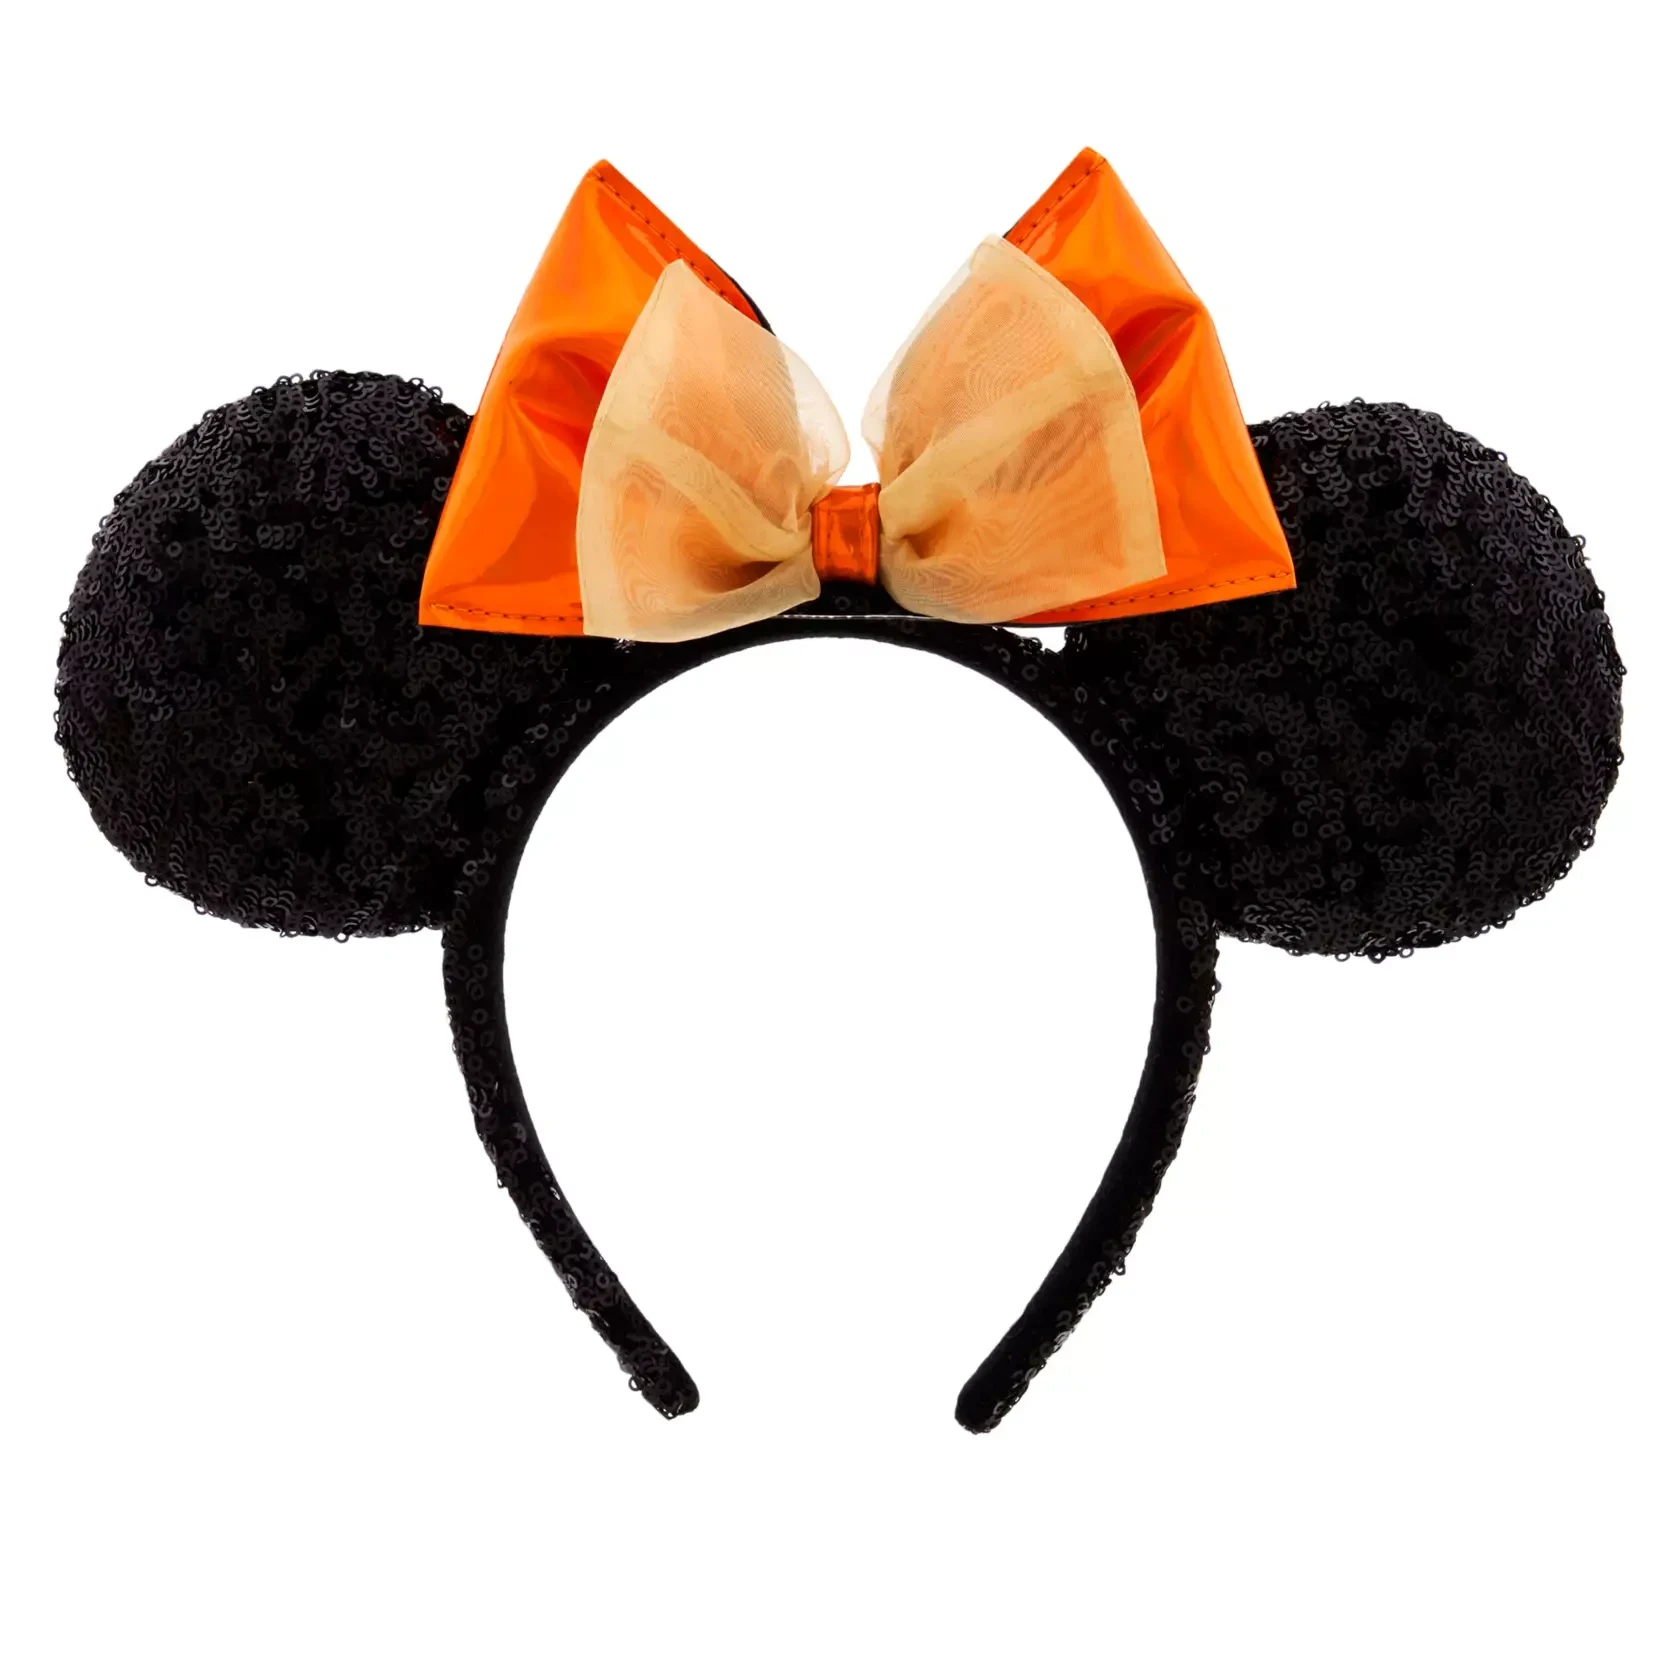 products Disney Parks - Minnie Mouse Ears Headband -Orange Bow